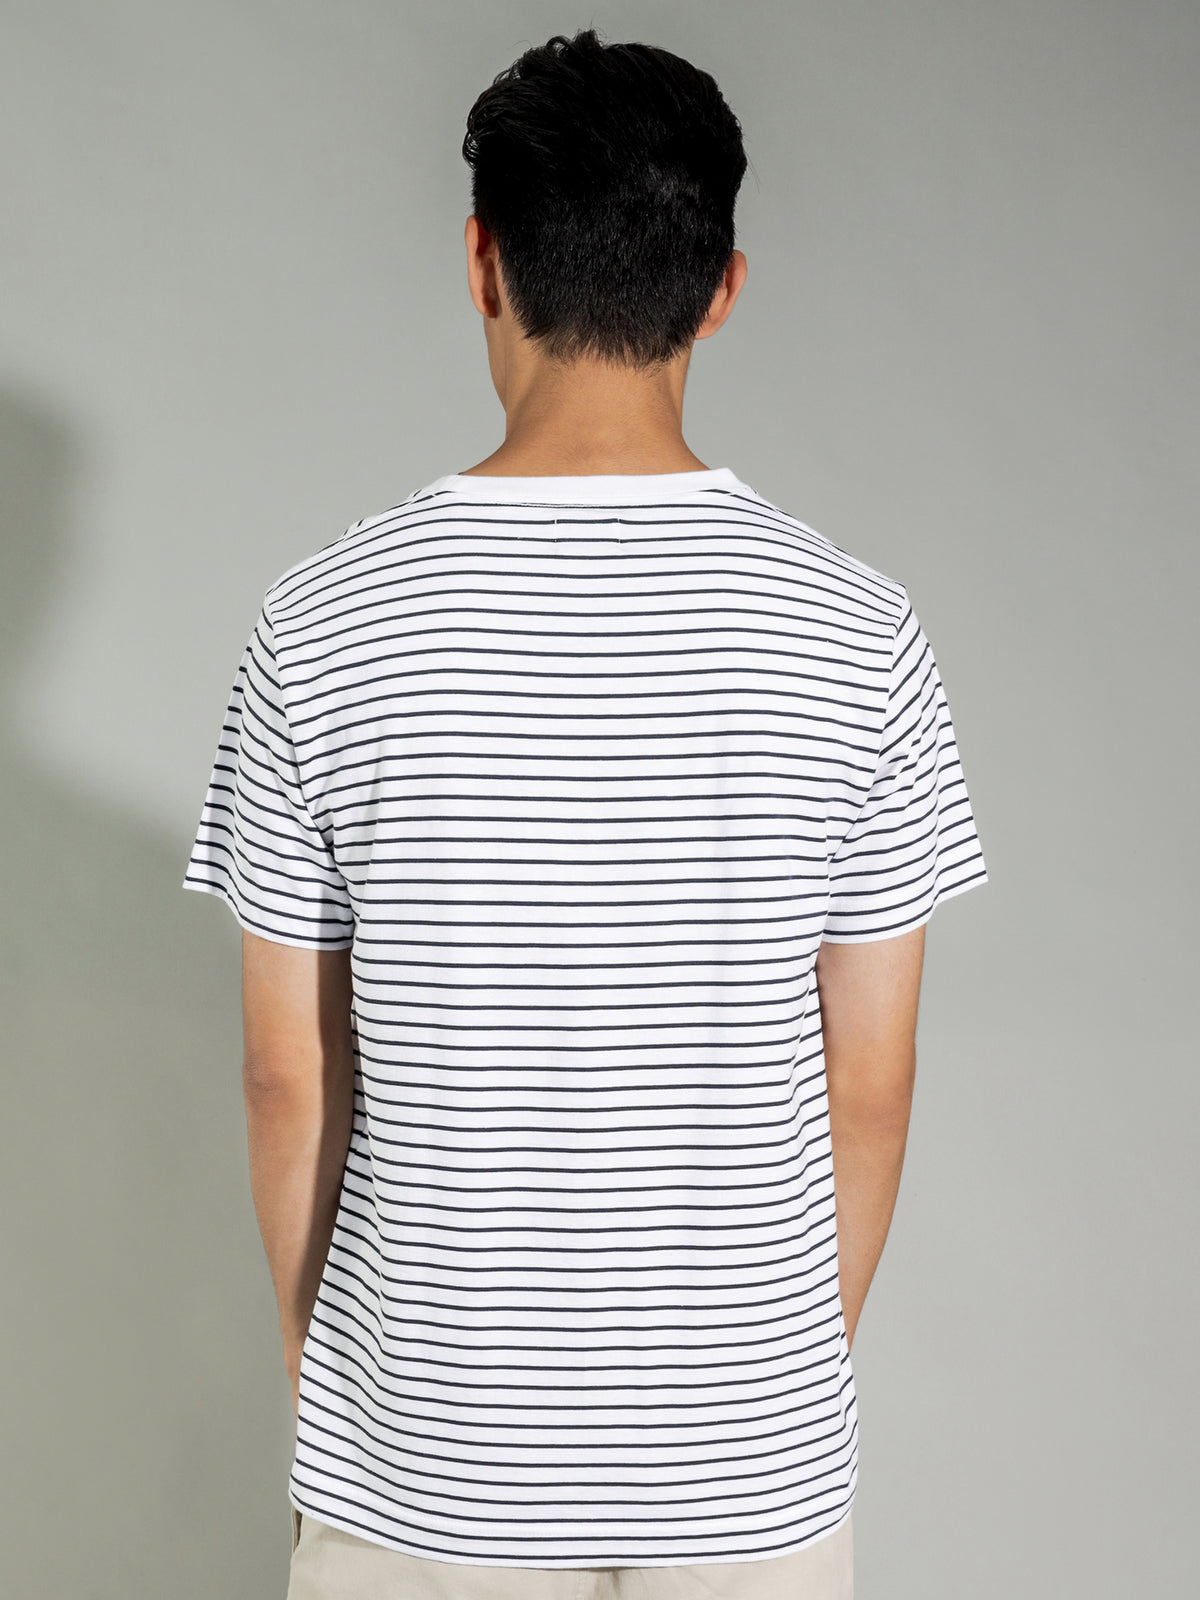 Avery Stripe T-Shirt in White